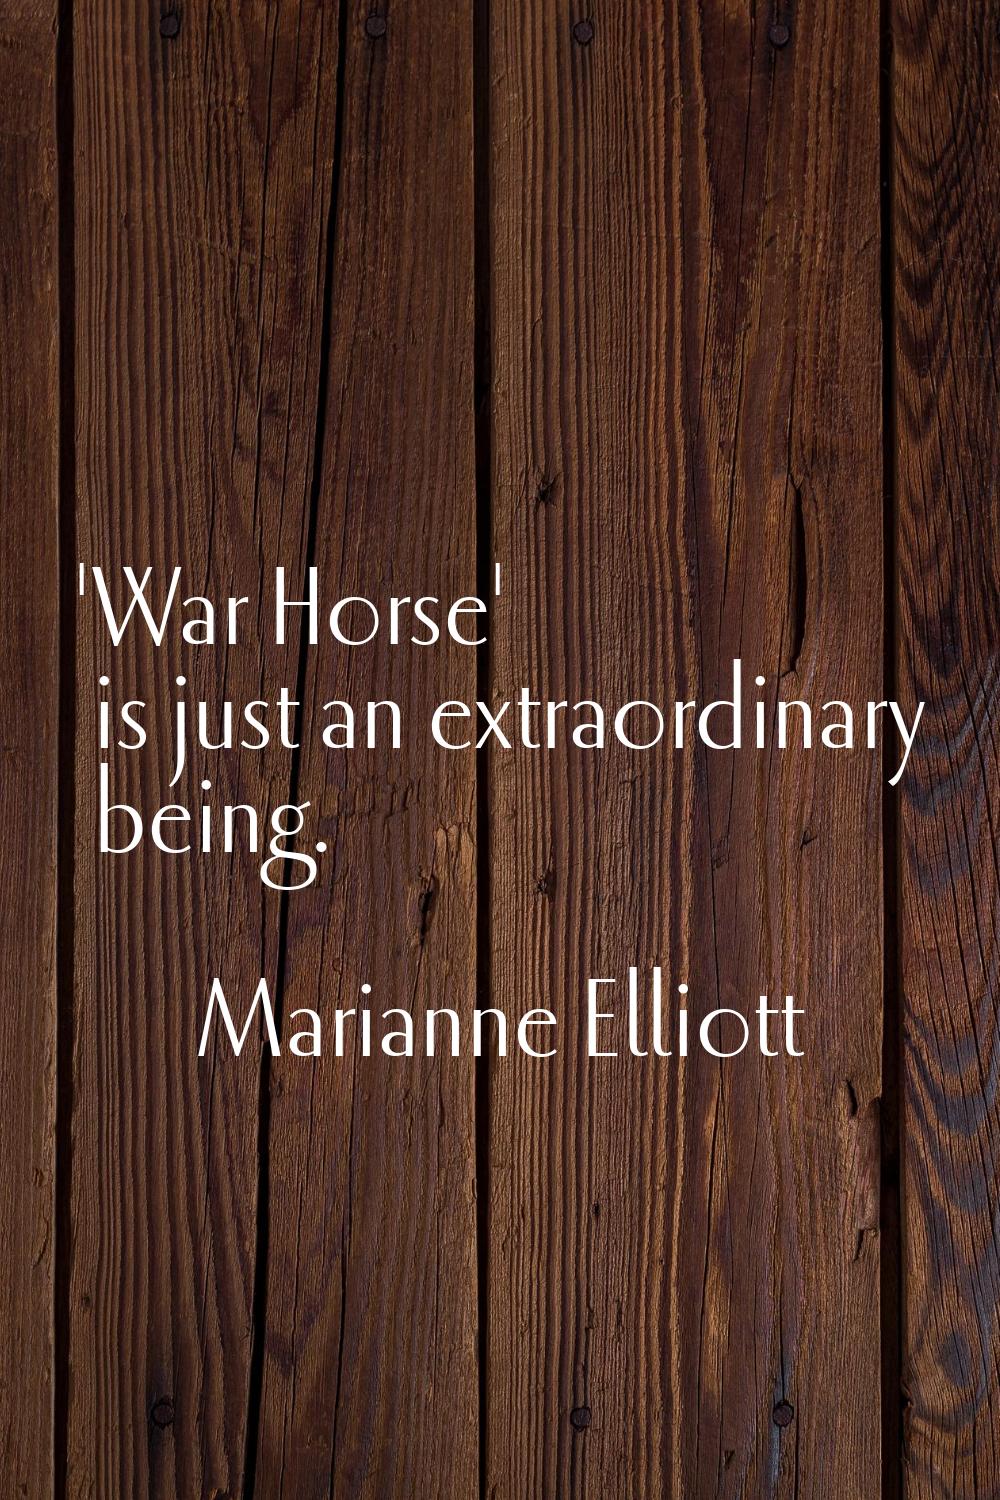 'War Horse' is just an extraordinary being.